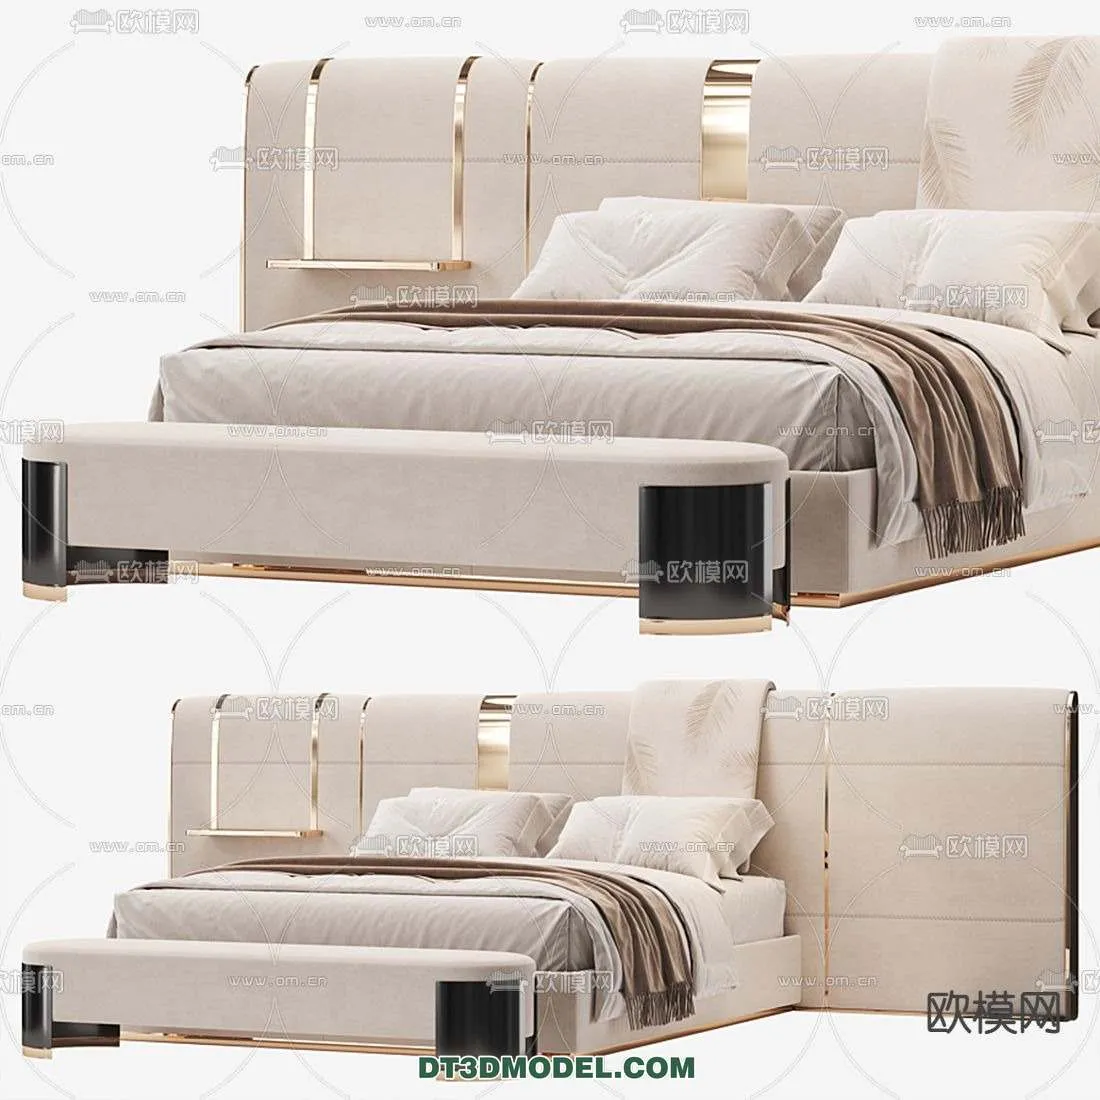 Double Bed 3D Models – 0066